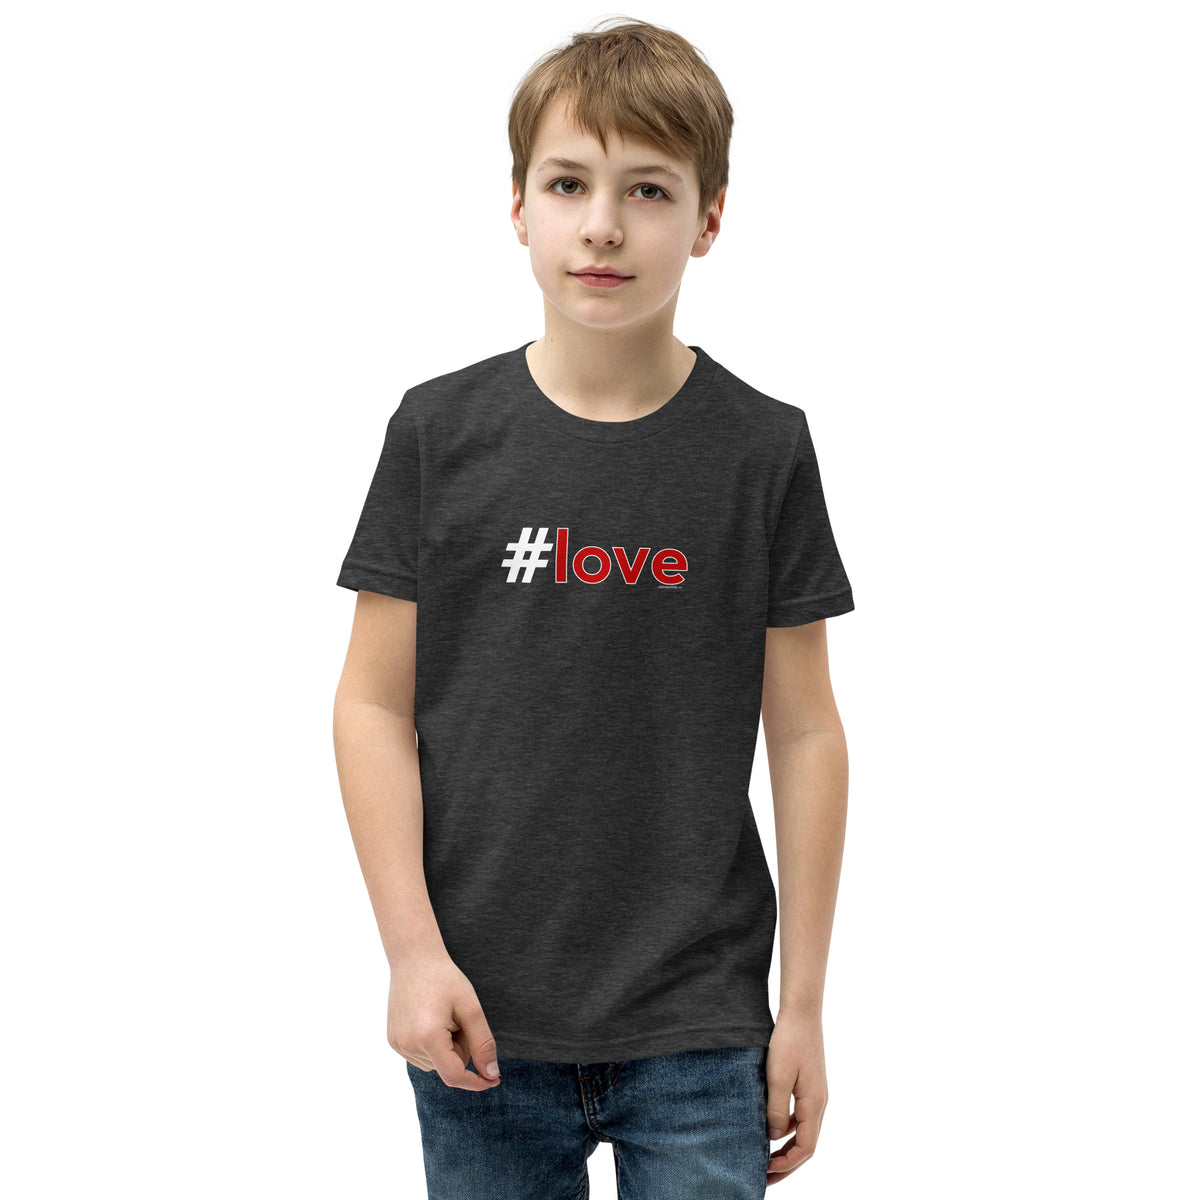 Hashtag Love Red Kids Valentine’s Day T-Shirt